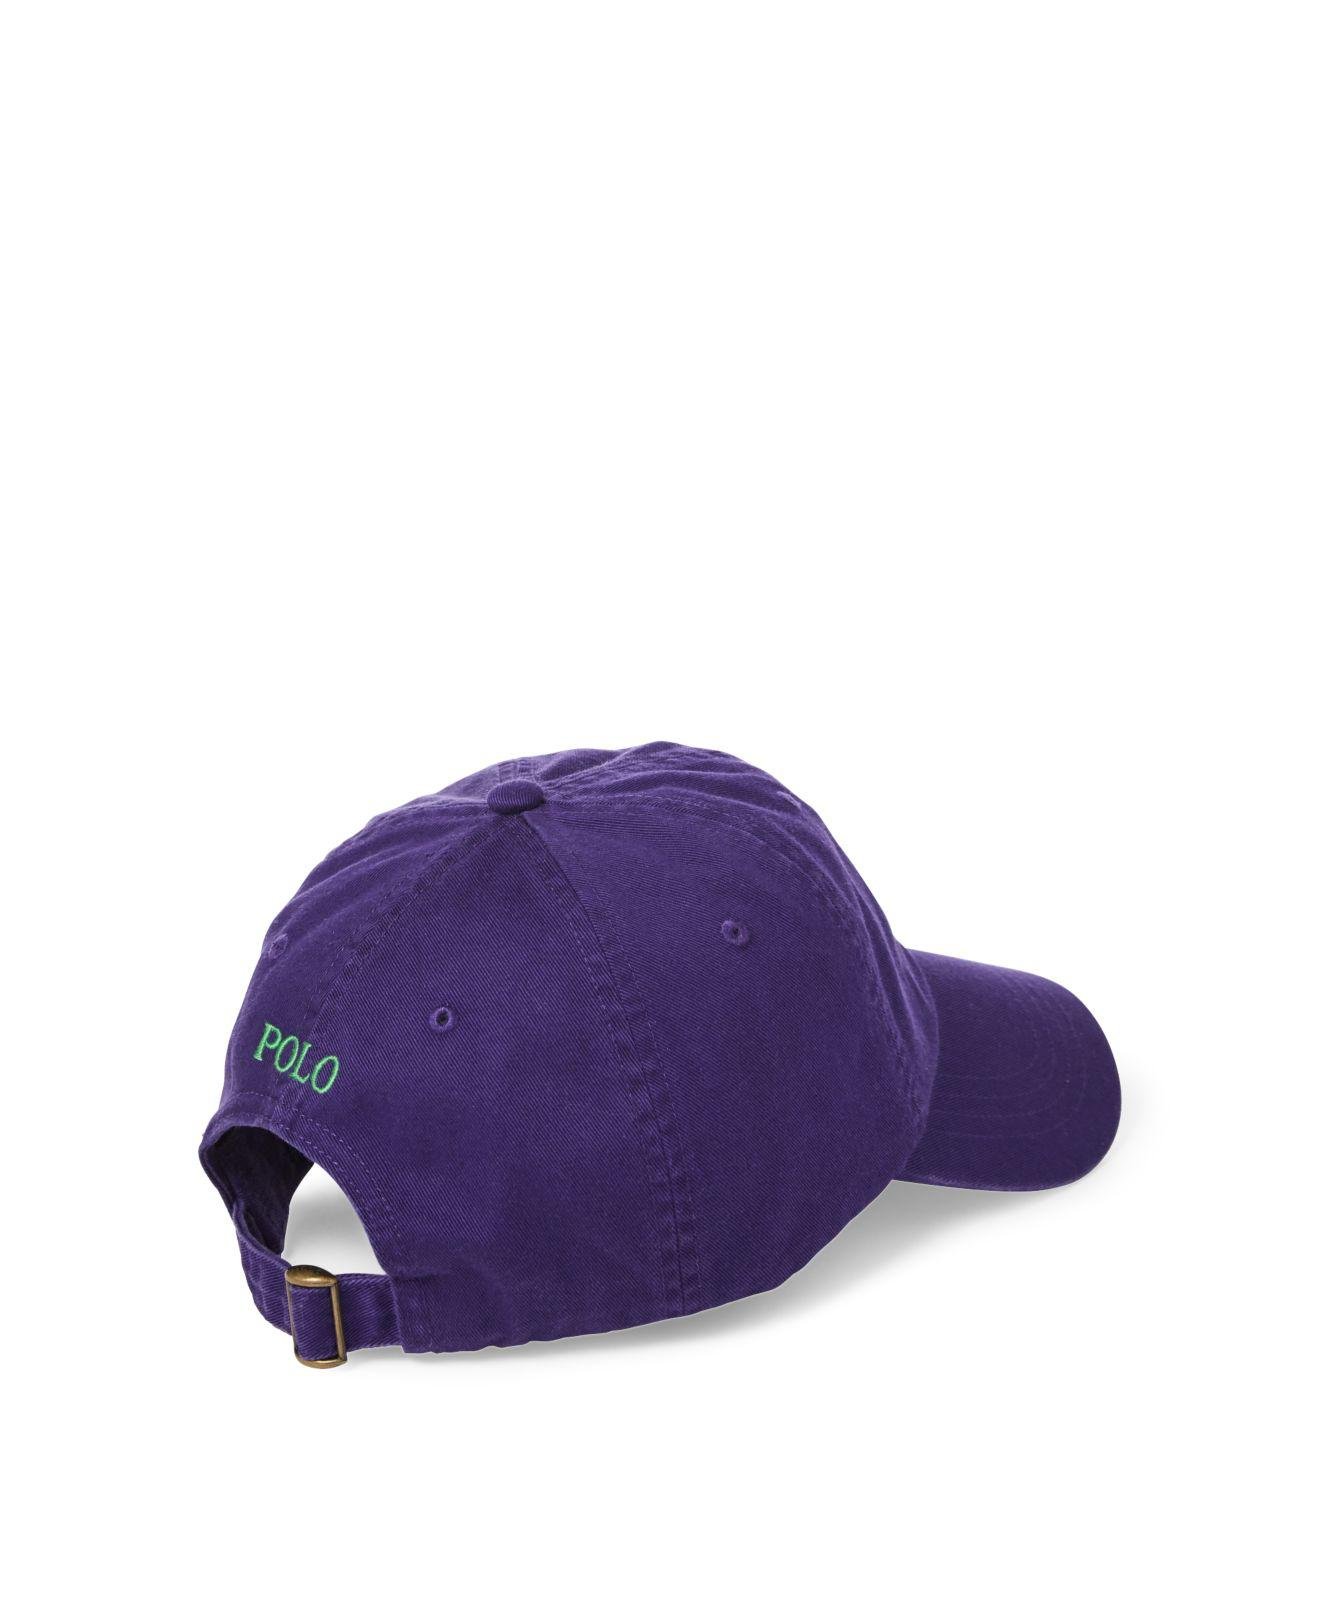 Polo Ralph Lauren Cotton Chino Baseball Cap in Purple for Men - Lyst